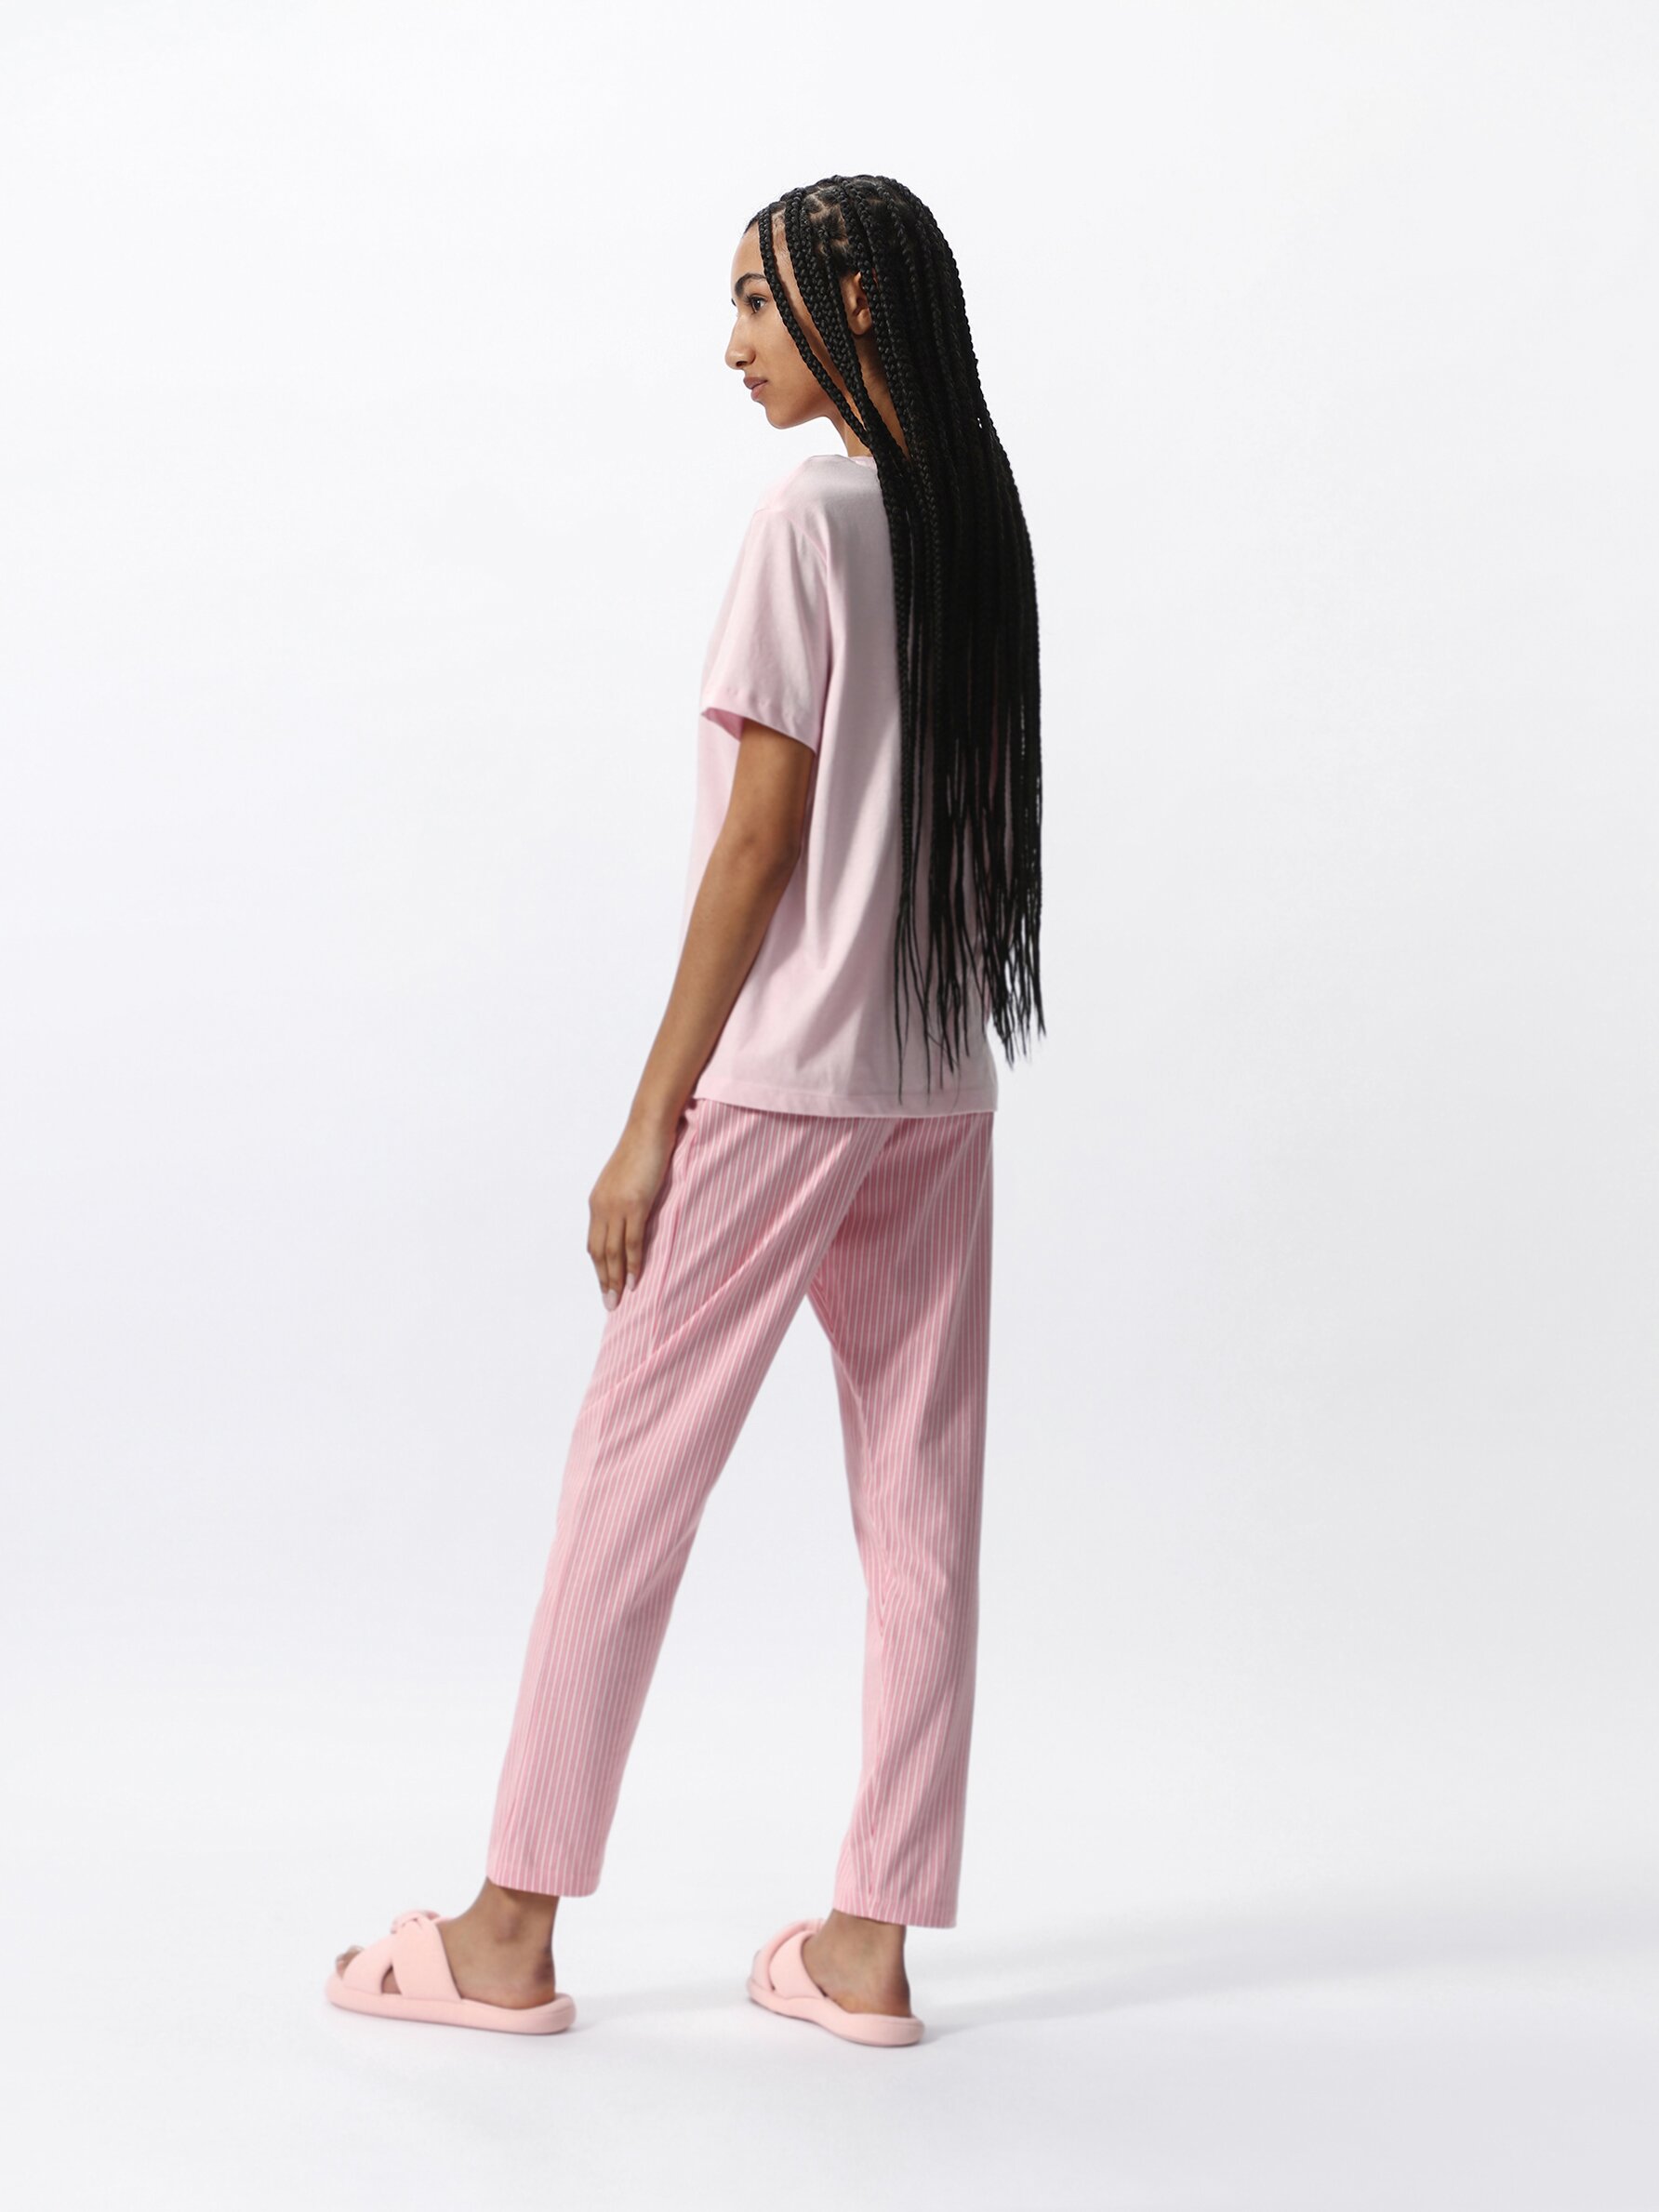 Dusty Pink Striped Brushed Cotton Pyjama Set Love Leggings, 60% OFF